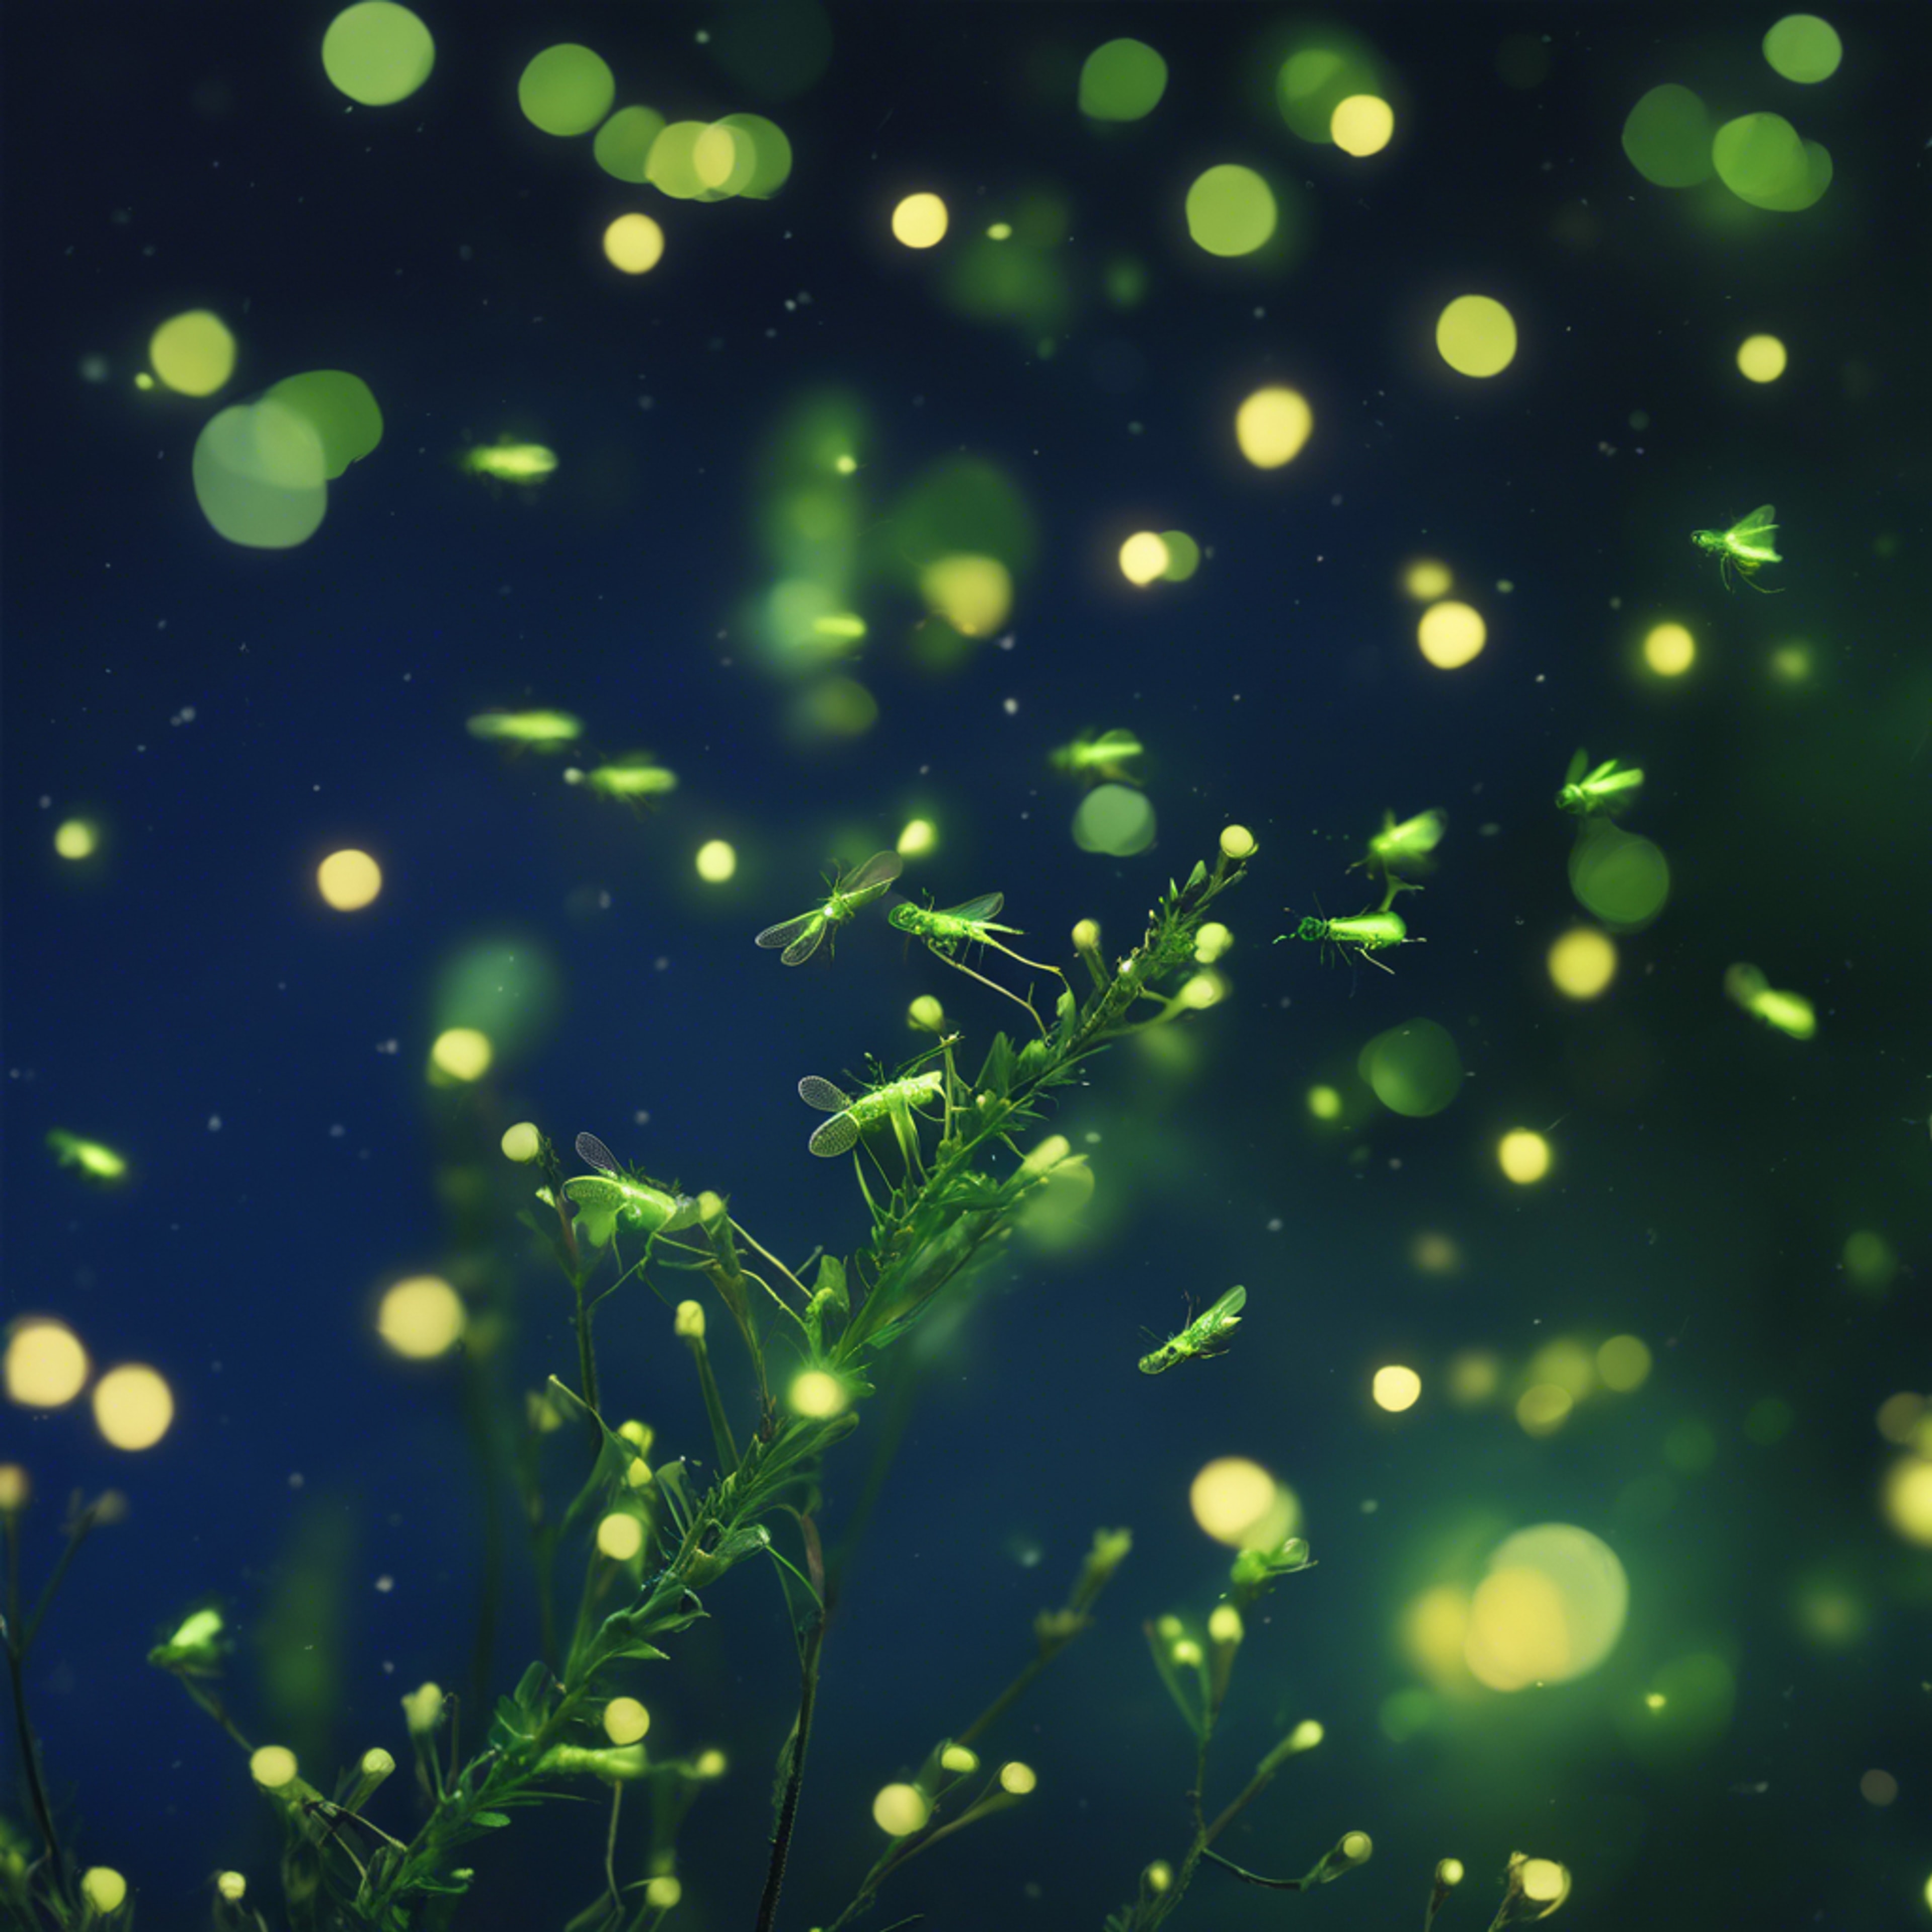 A myriad of emerald green fireflies flickering against a deep twilight blue sky. Tapeta[603476c68fd84f259627]